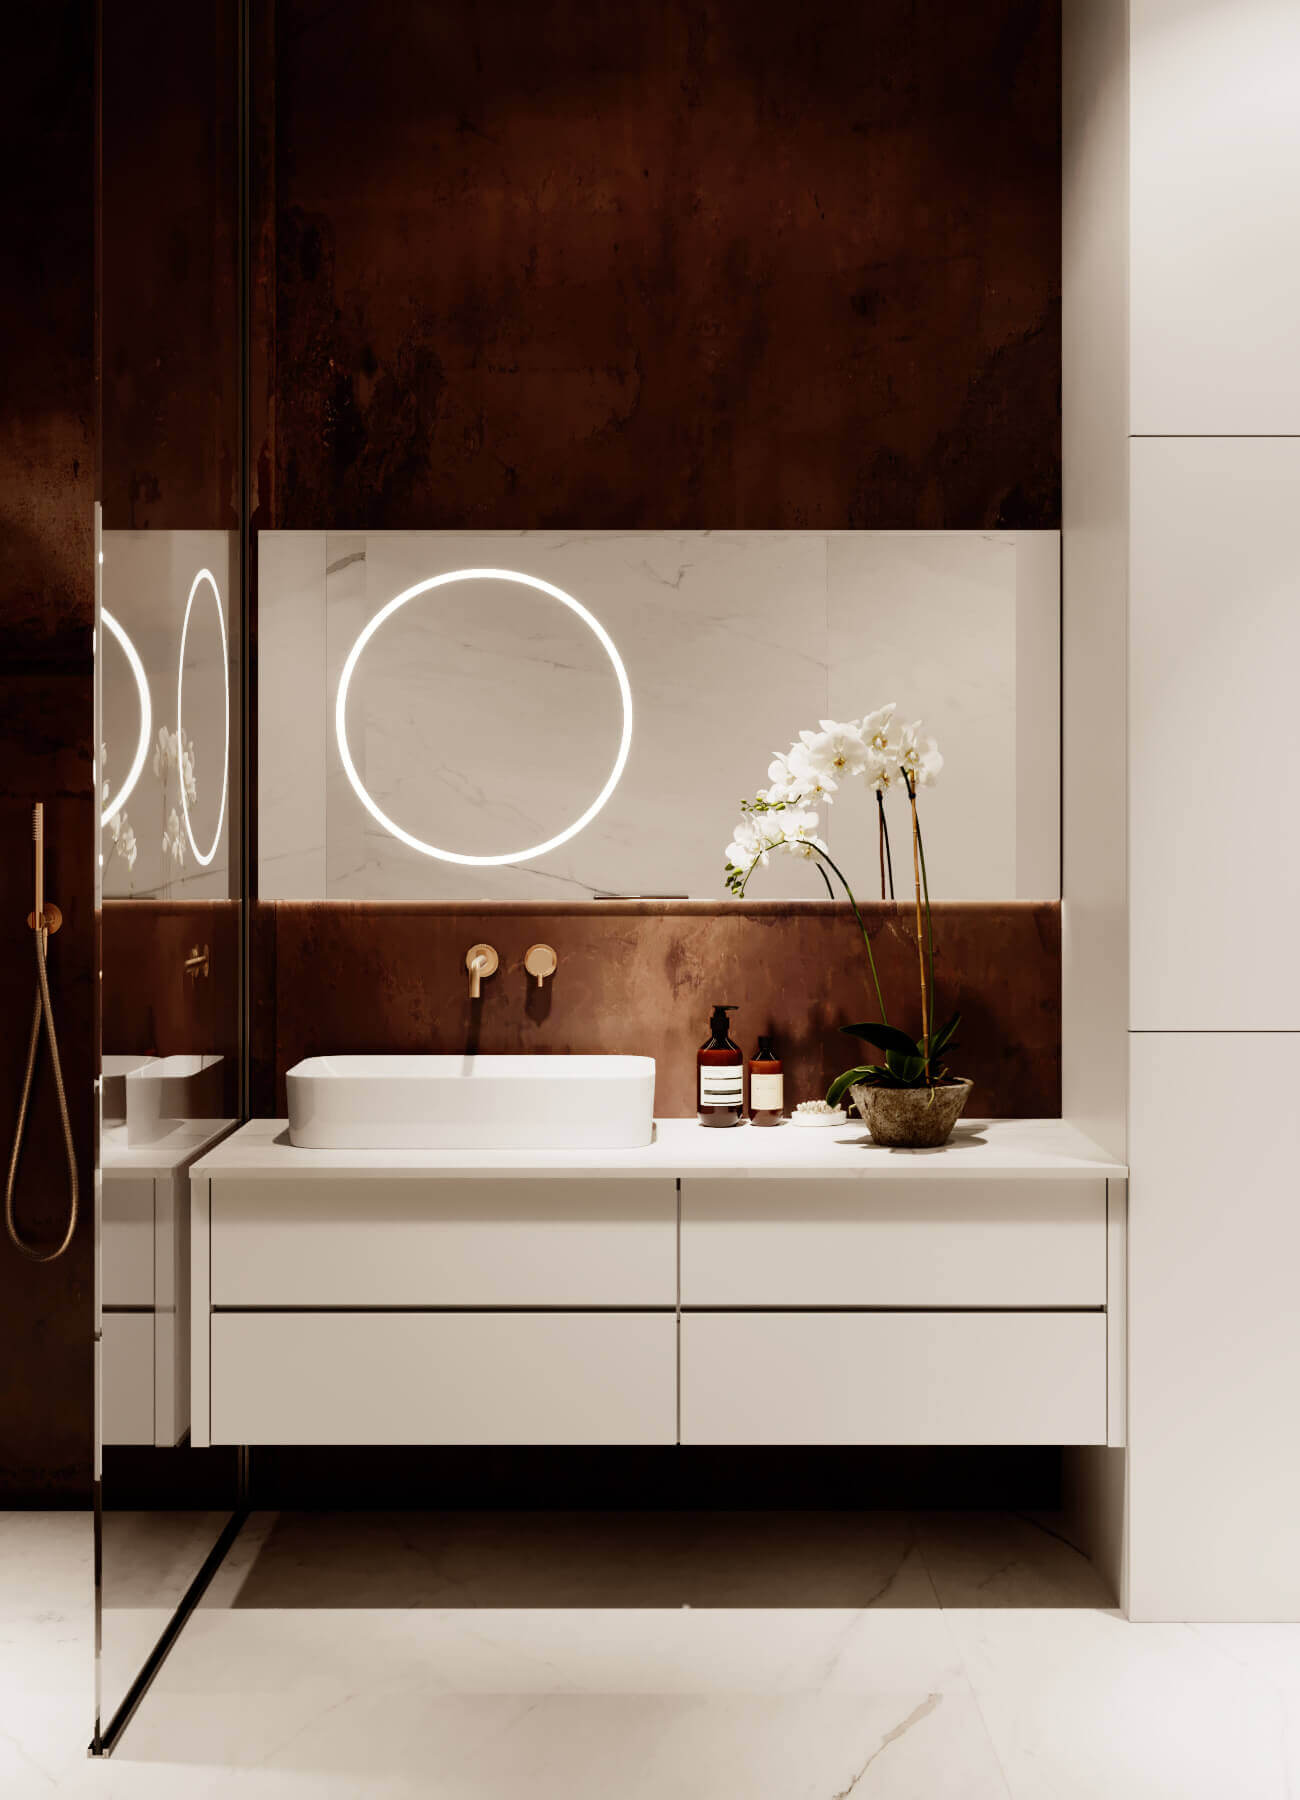 Bernardazzi Apartment bathroom mirror led light - cgi visualization